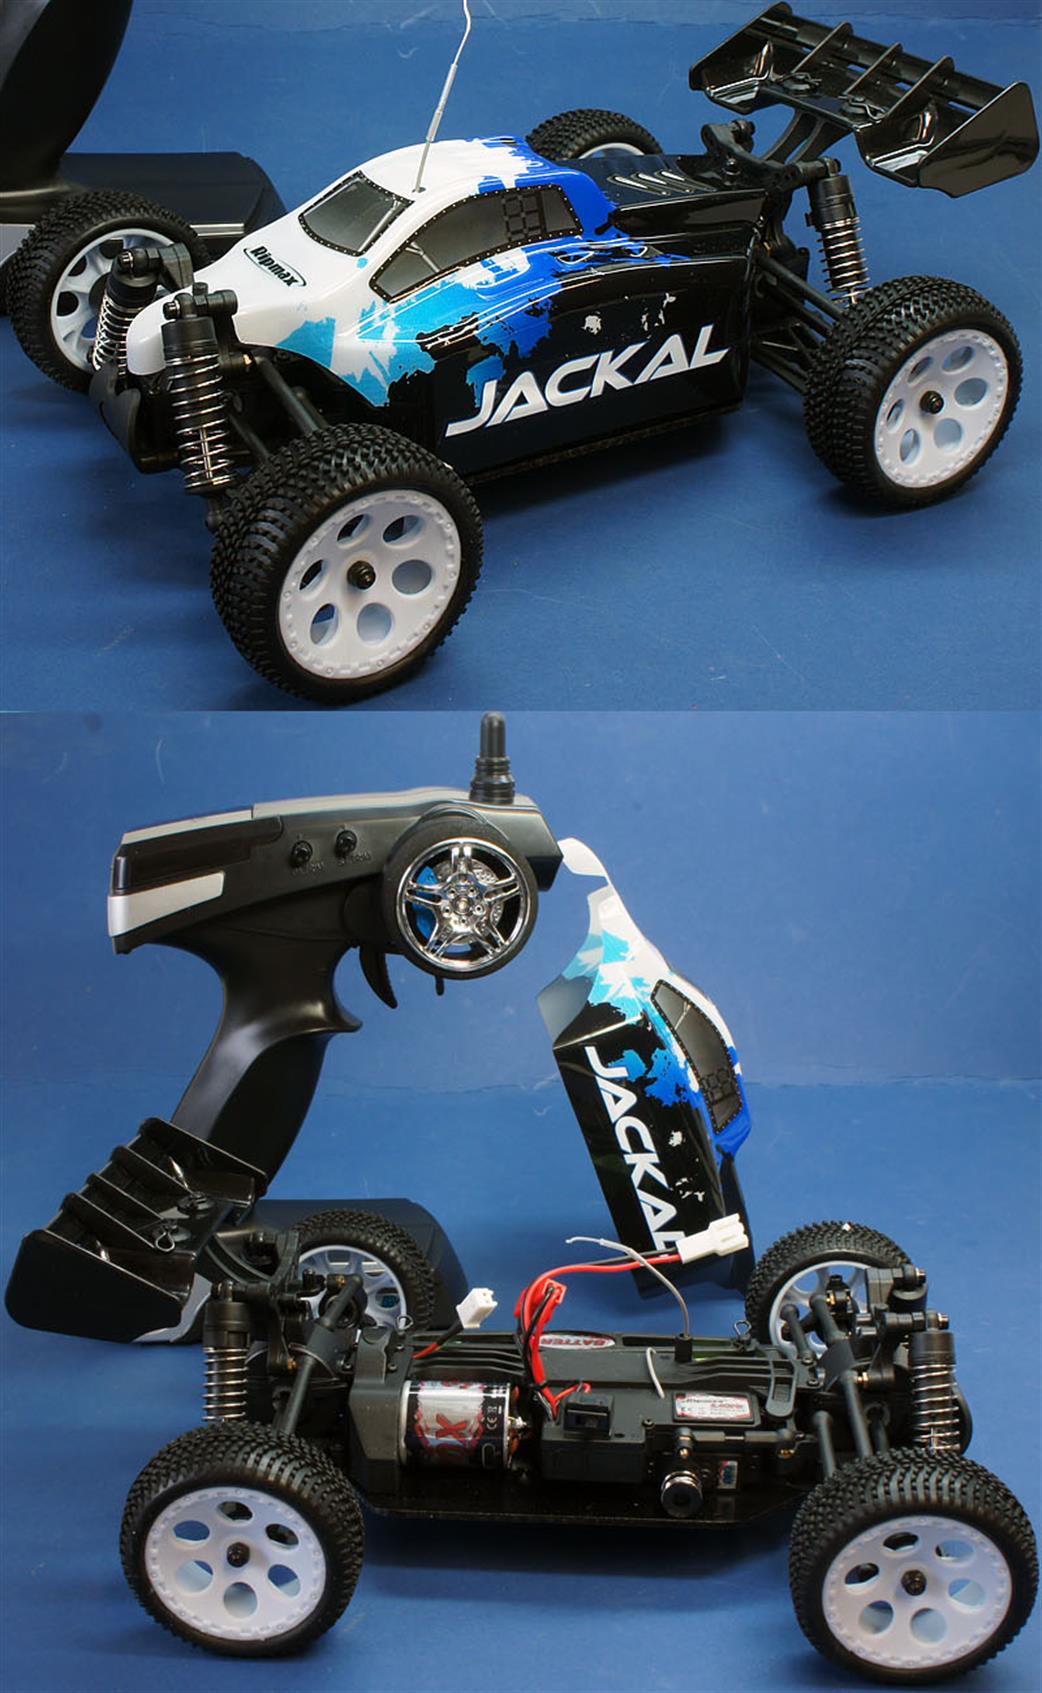 Ripmax 1/18 RMX0010 Jackal High Performance RC Buggy Ready to Run